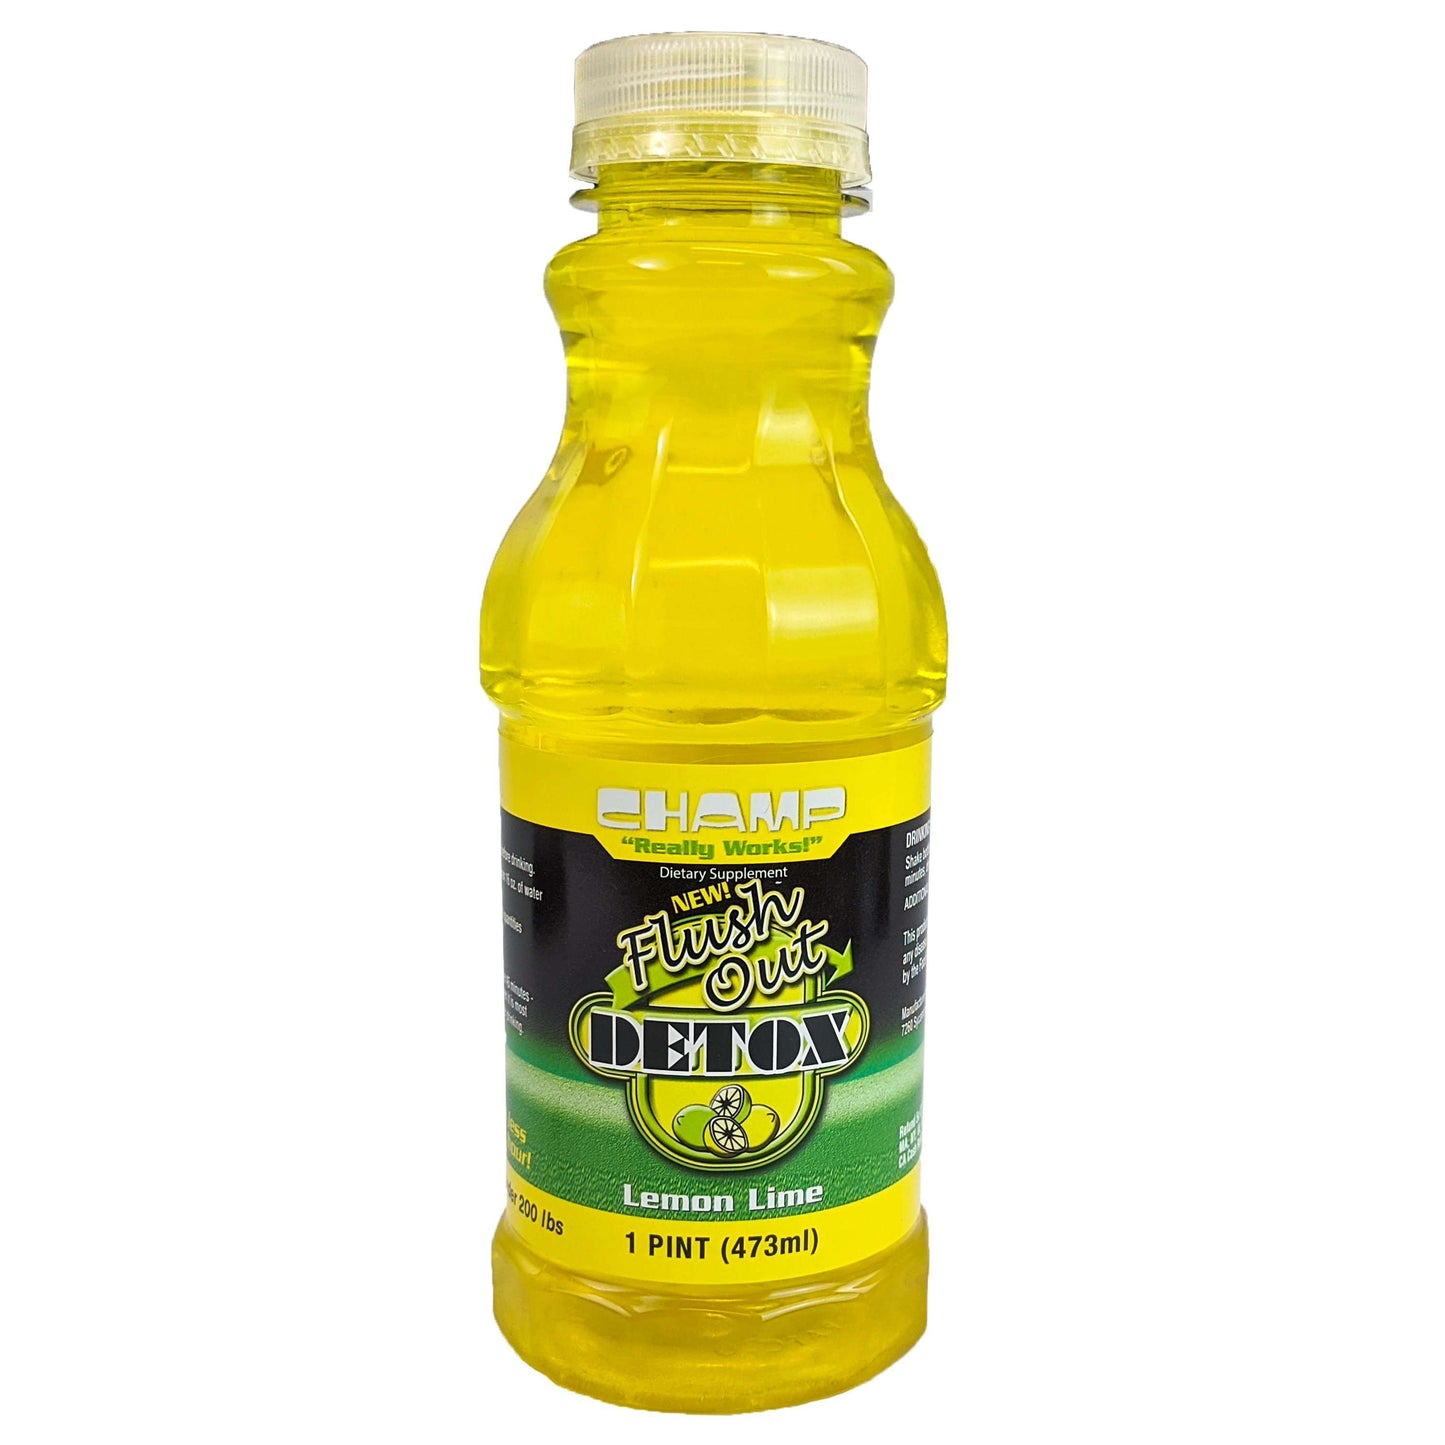 Champ Flush Out Detox Drink 1 Pint/473ml, Lemon Lime Flavor